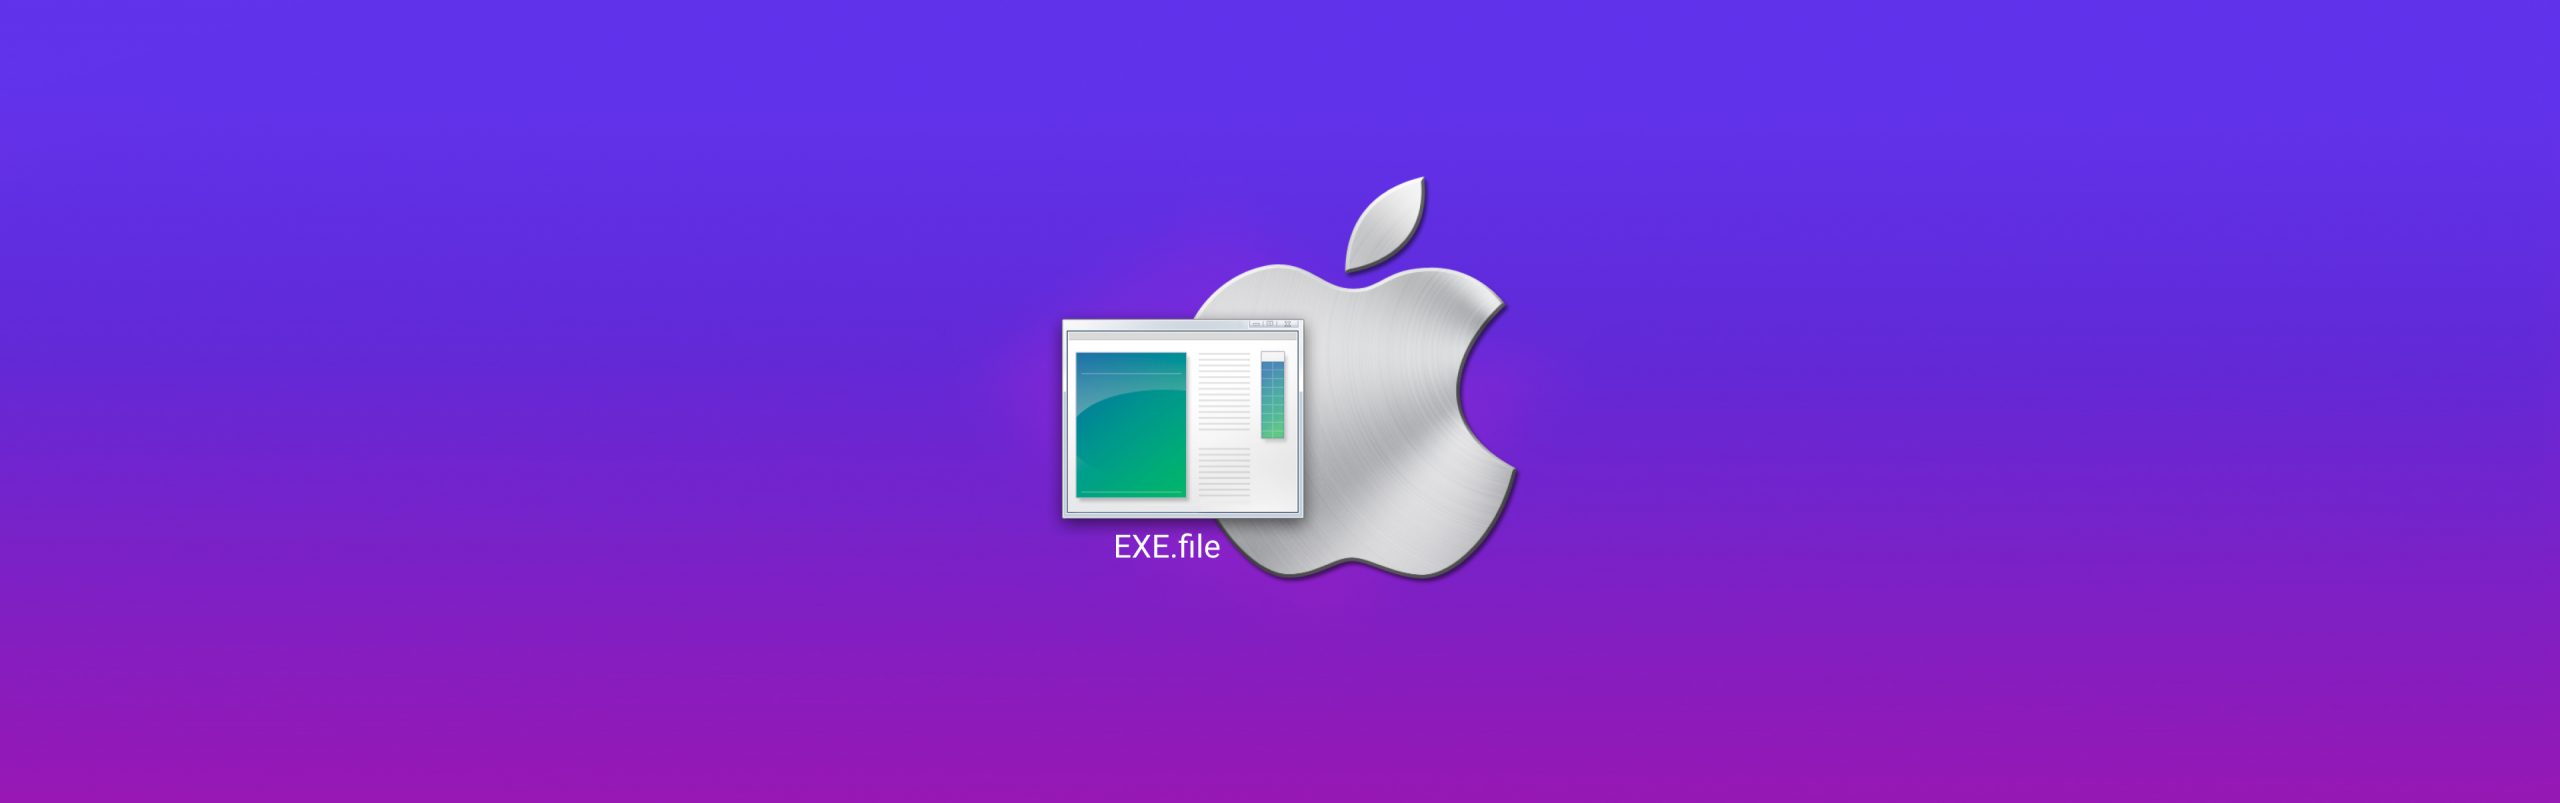 open windows exe files on mac